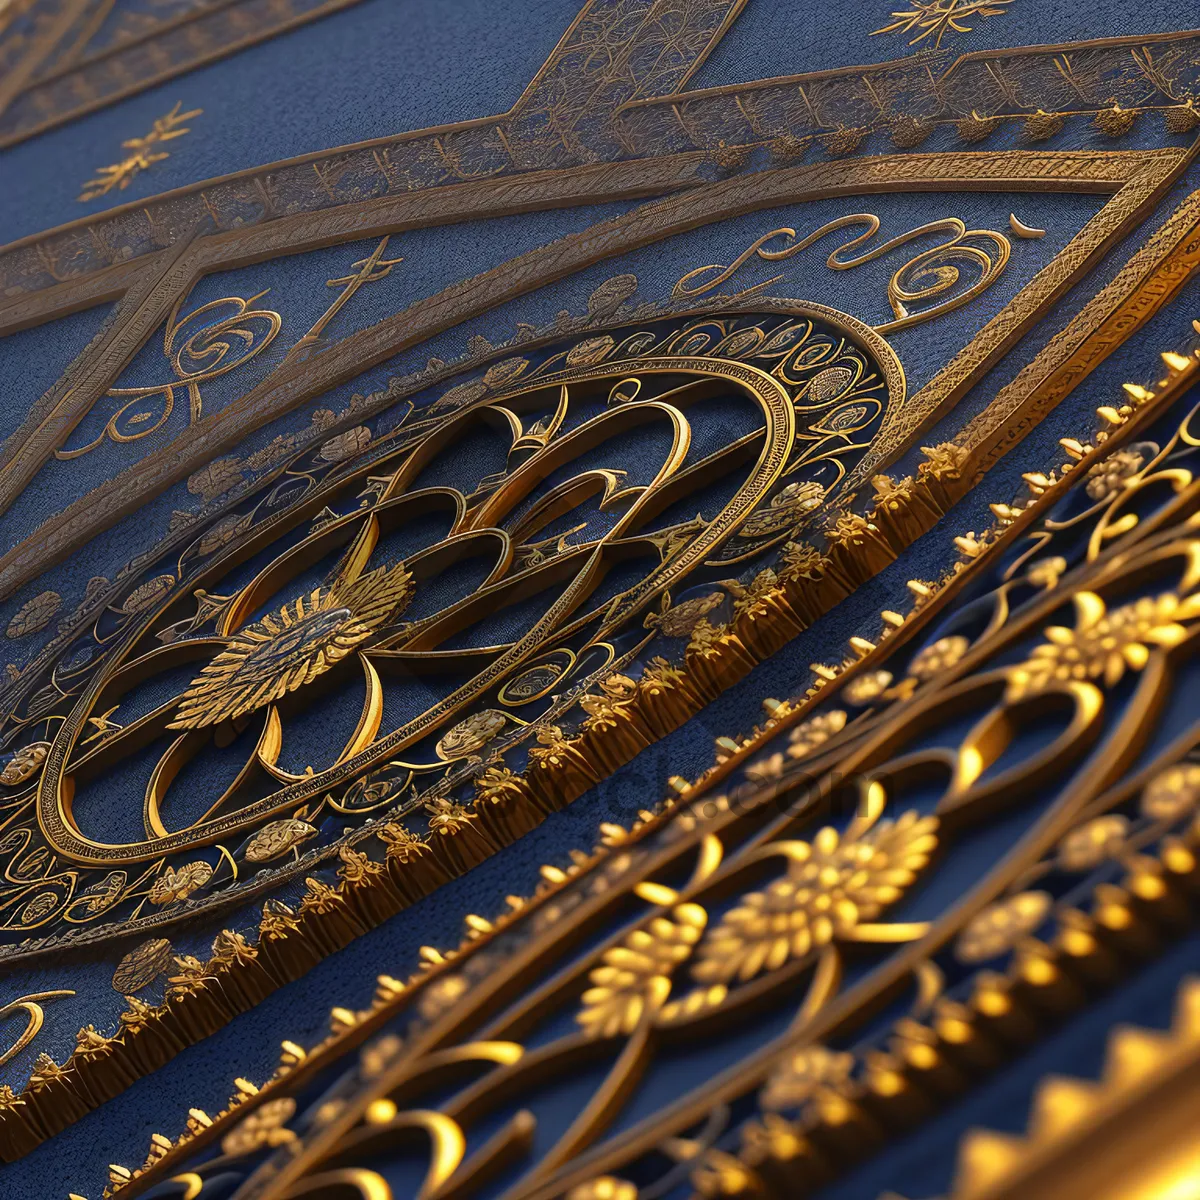 Picture of Exquisite Arabesque Prayer Rug: Iconic Artistry in Religious Architecture